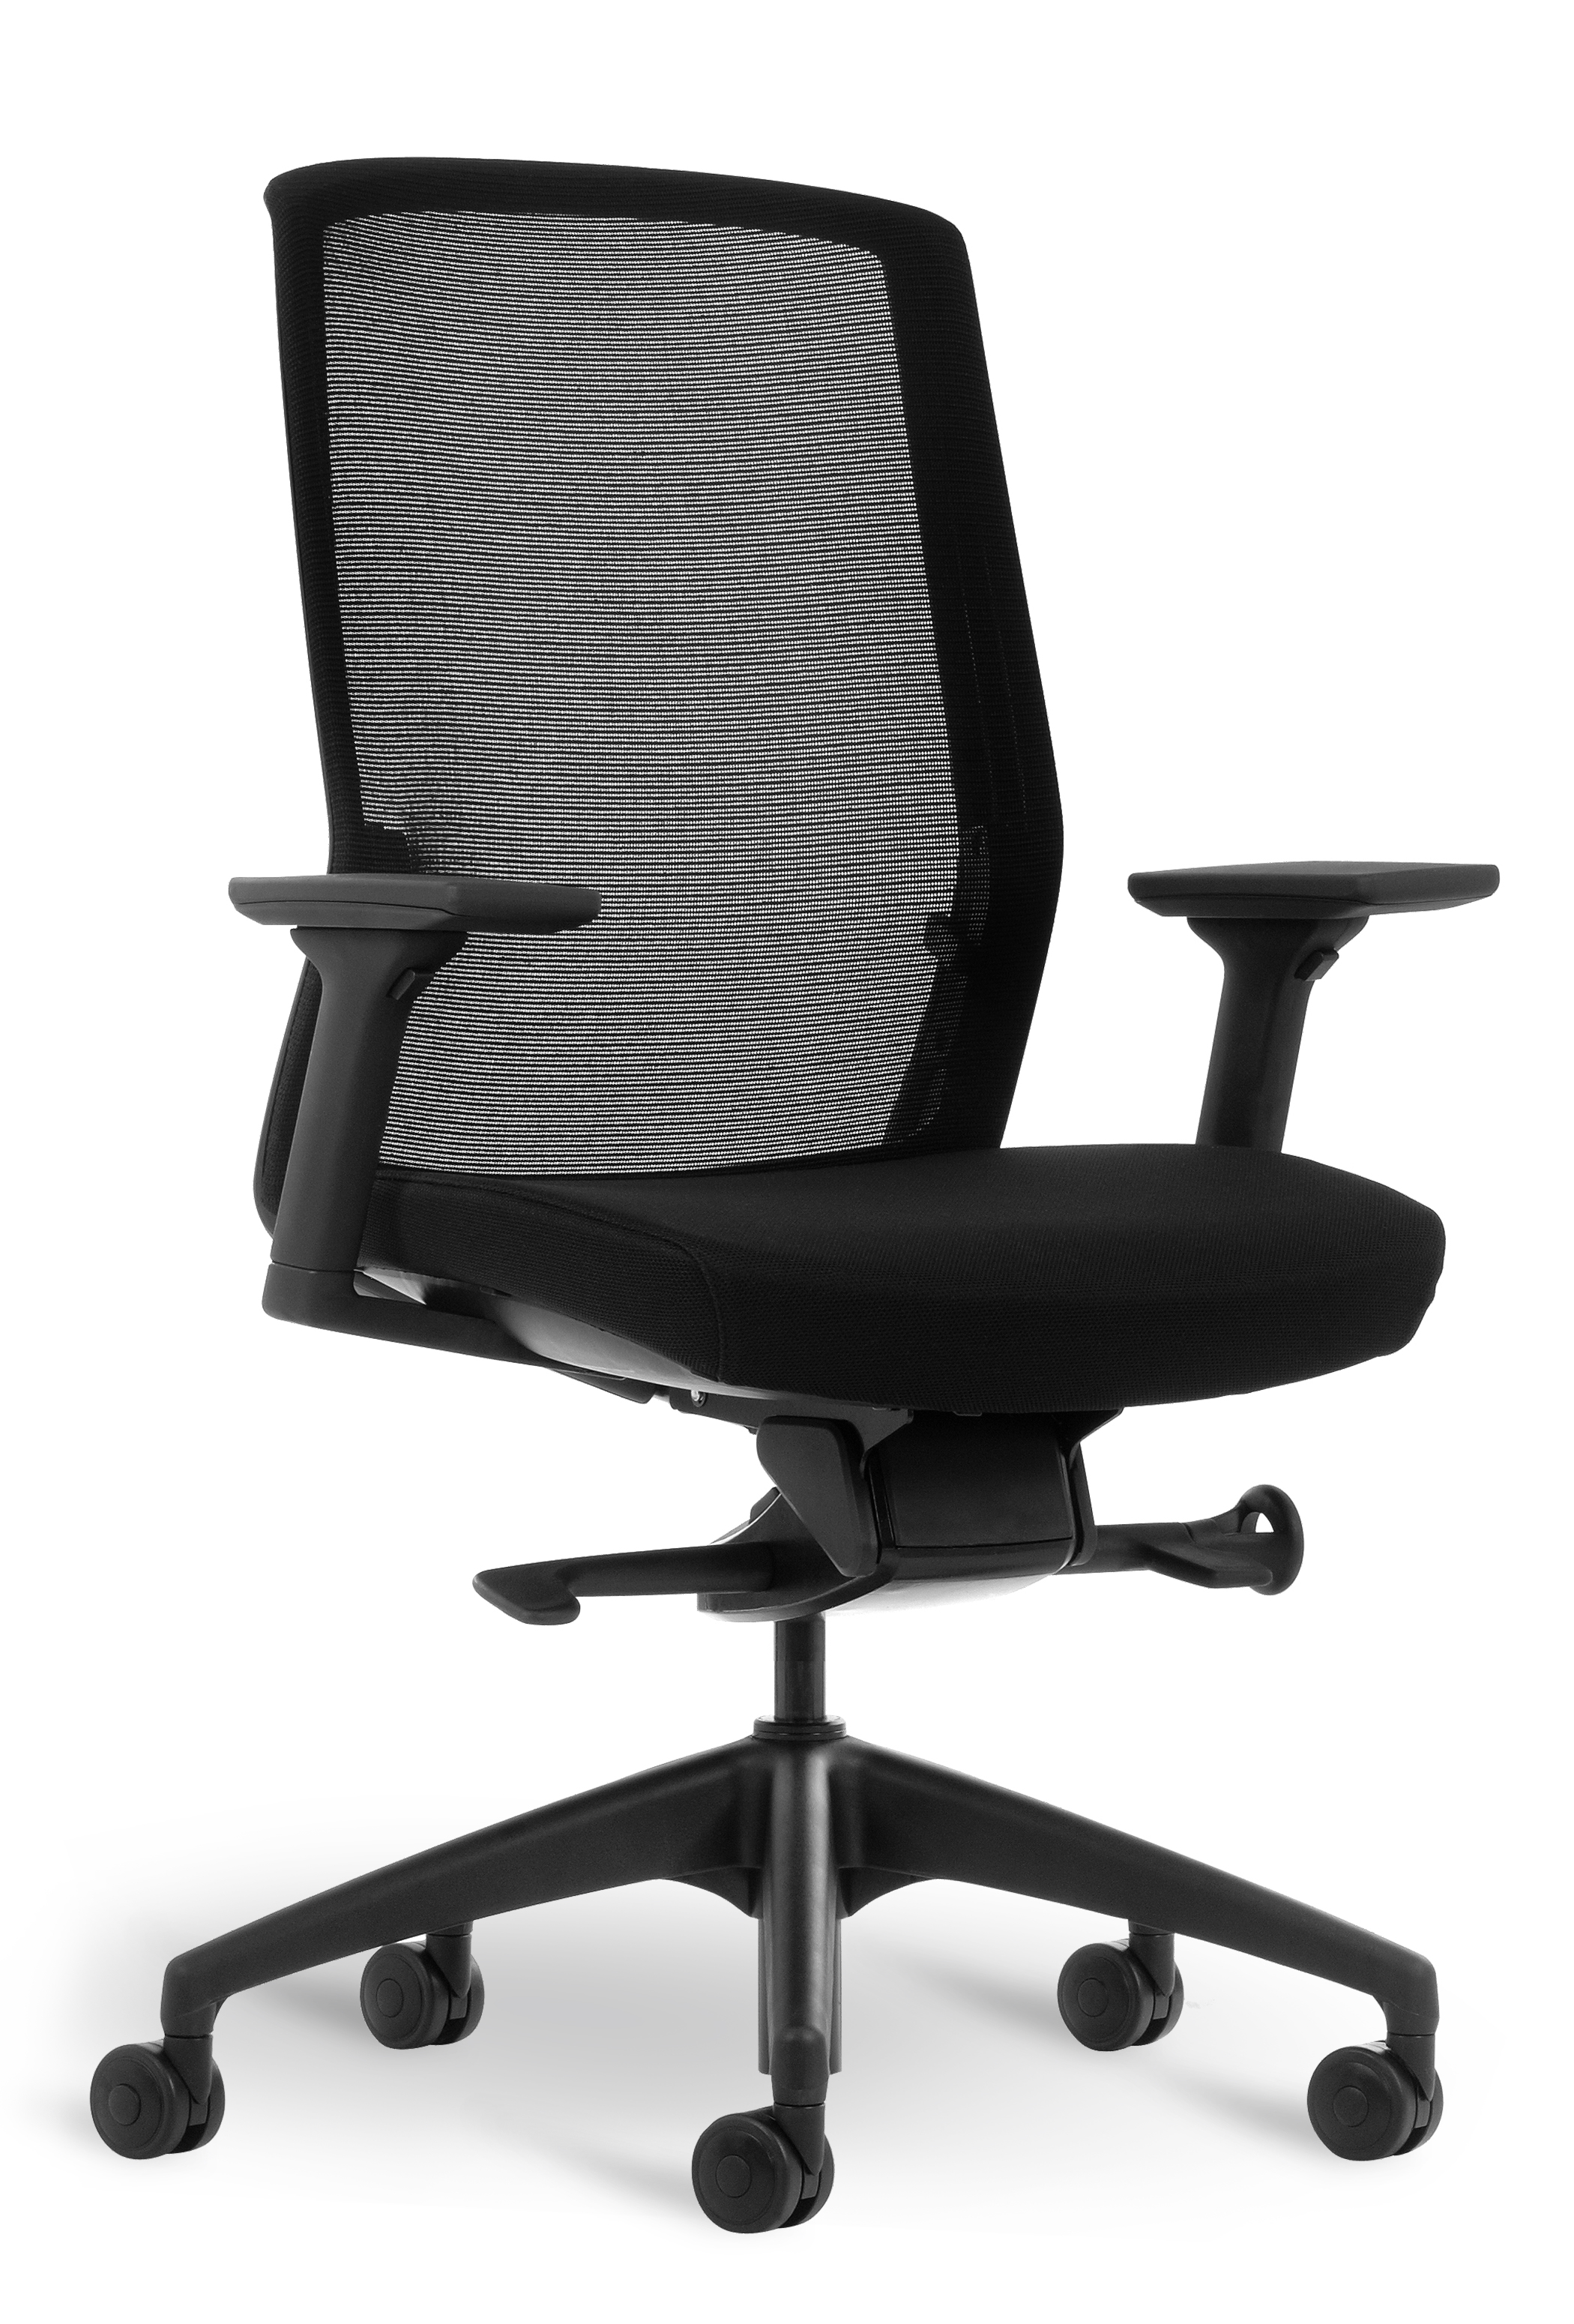 WS - J1 task chair - Black, black base (Front angle)